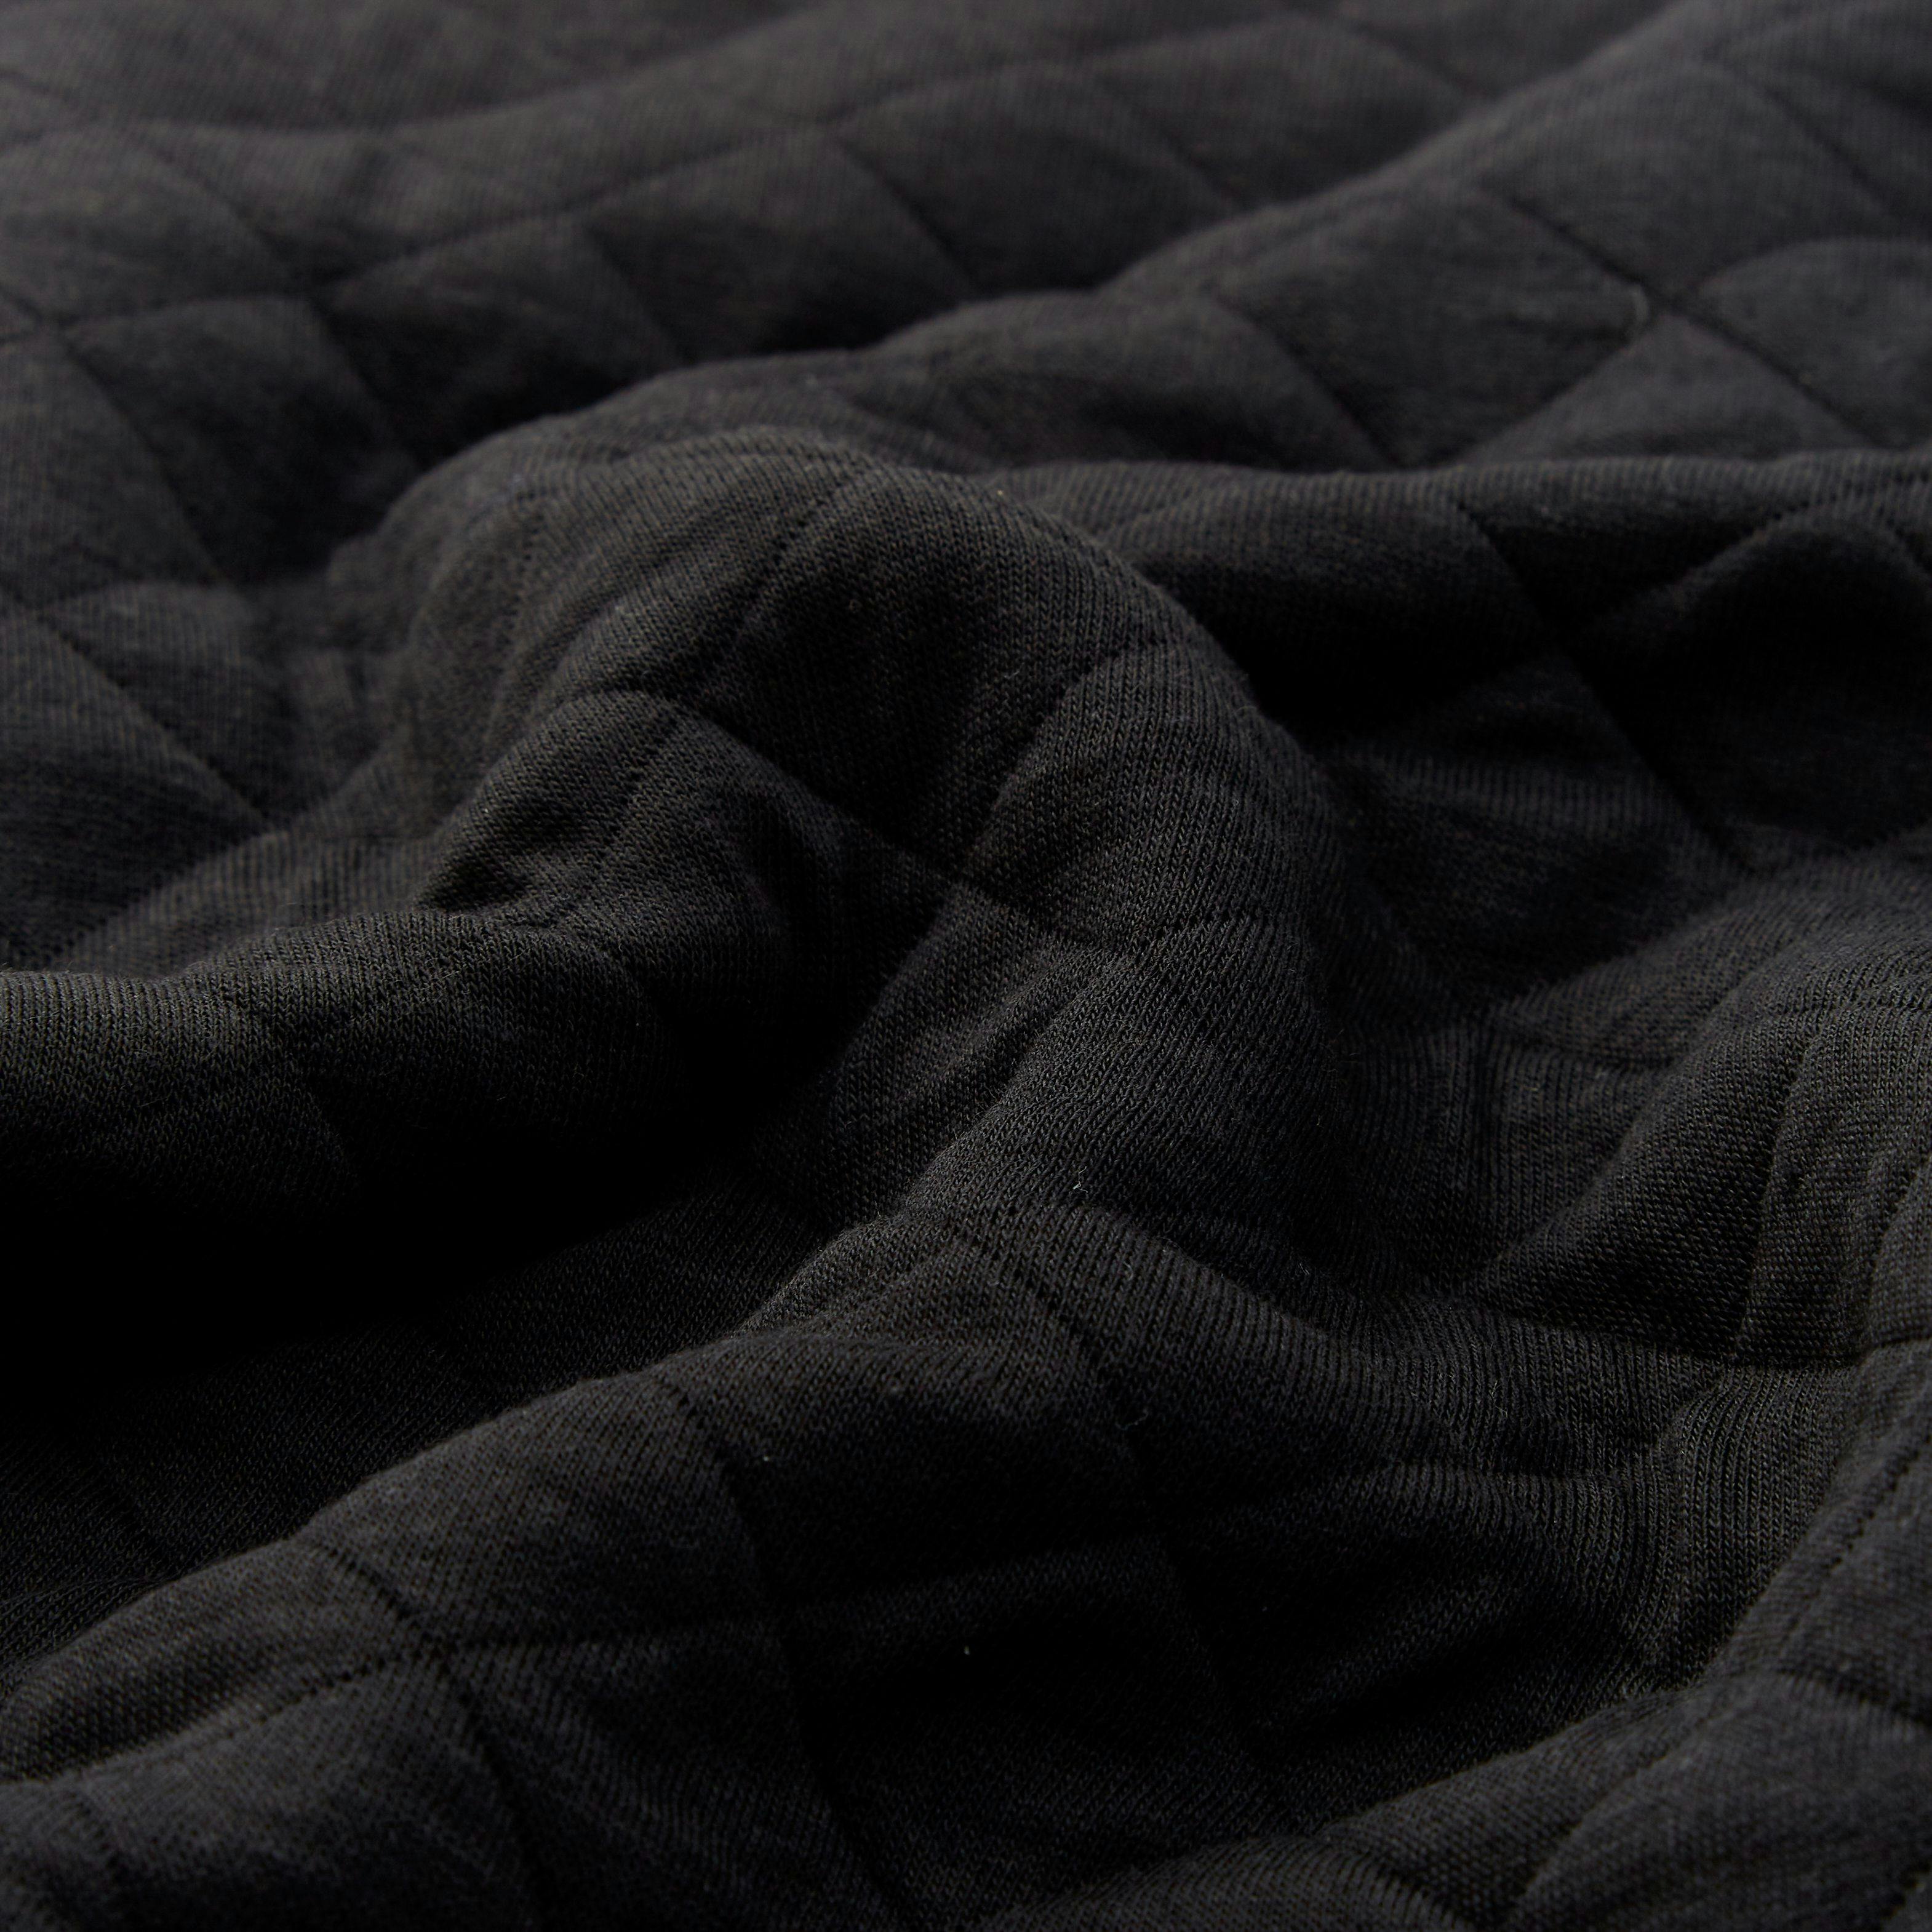 Tapestry Trucker Jacket - Black/Combo